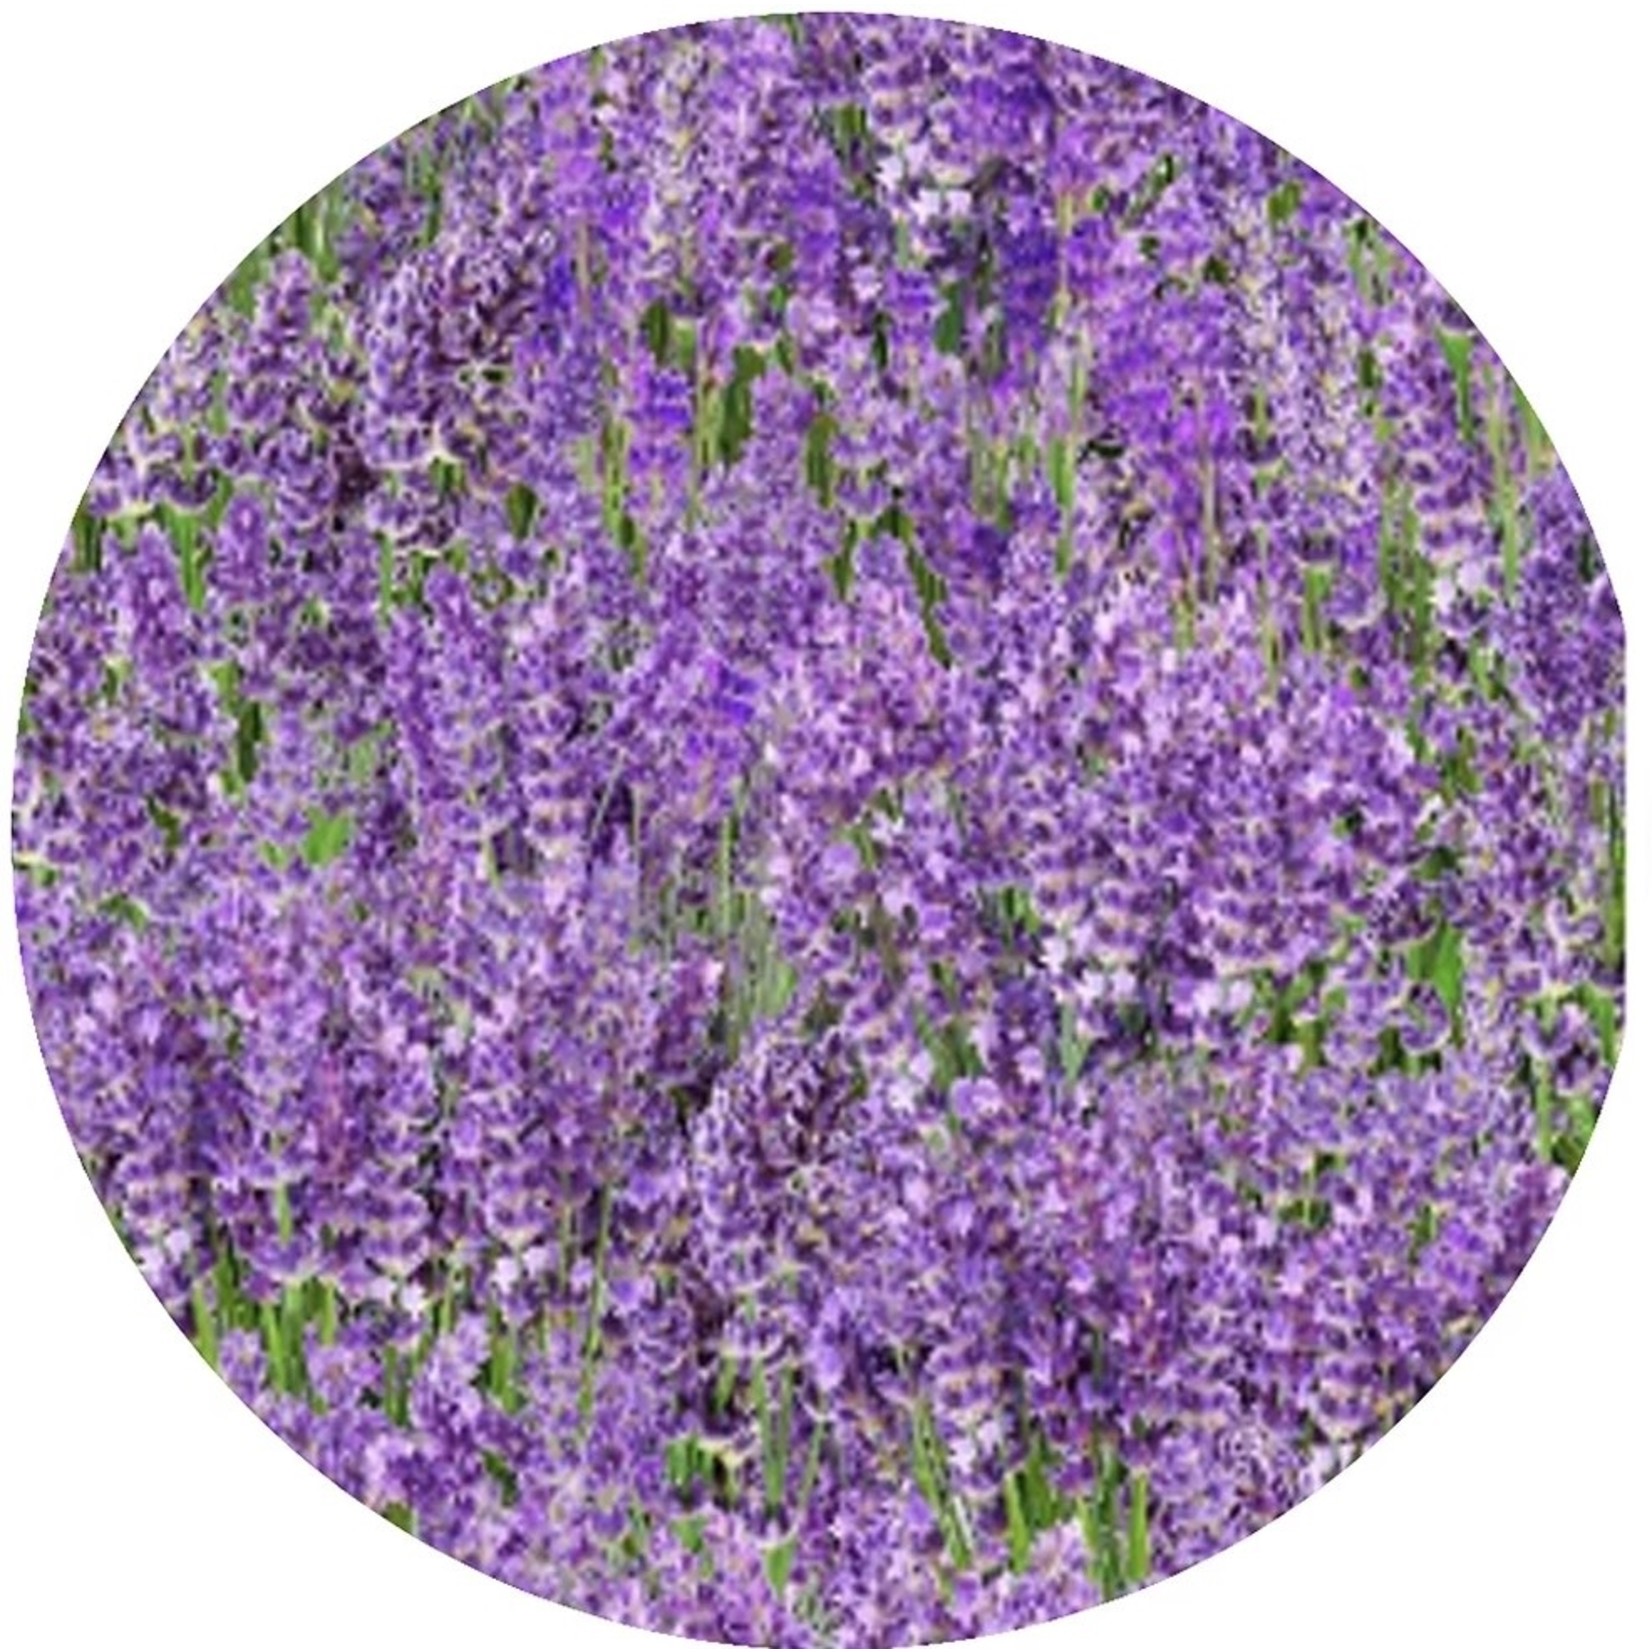 ANDREAS ANDREAS  Jar Opener Lavender Medley